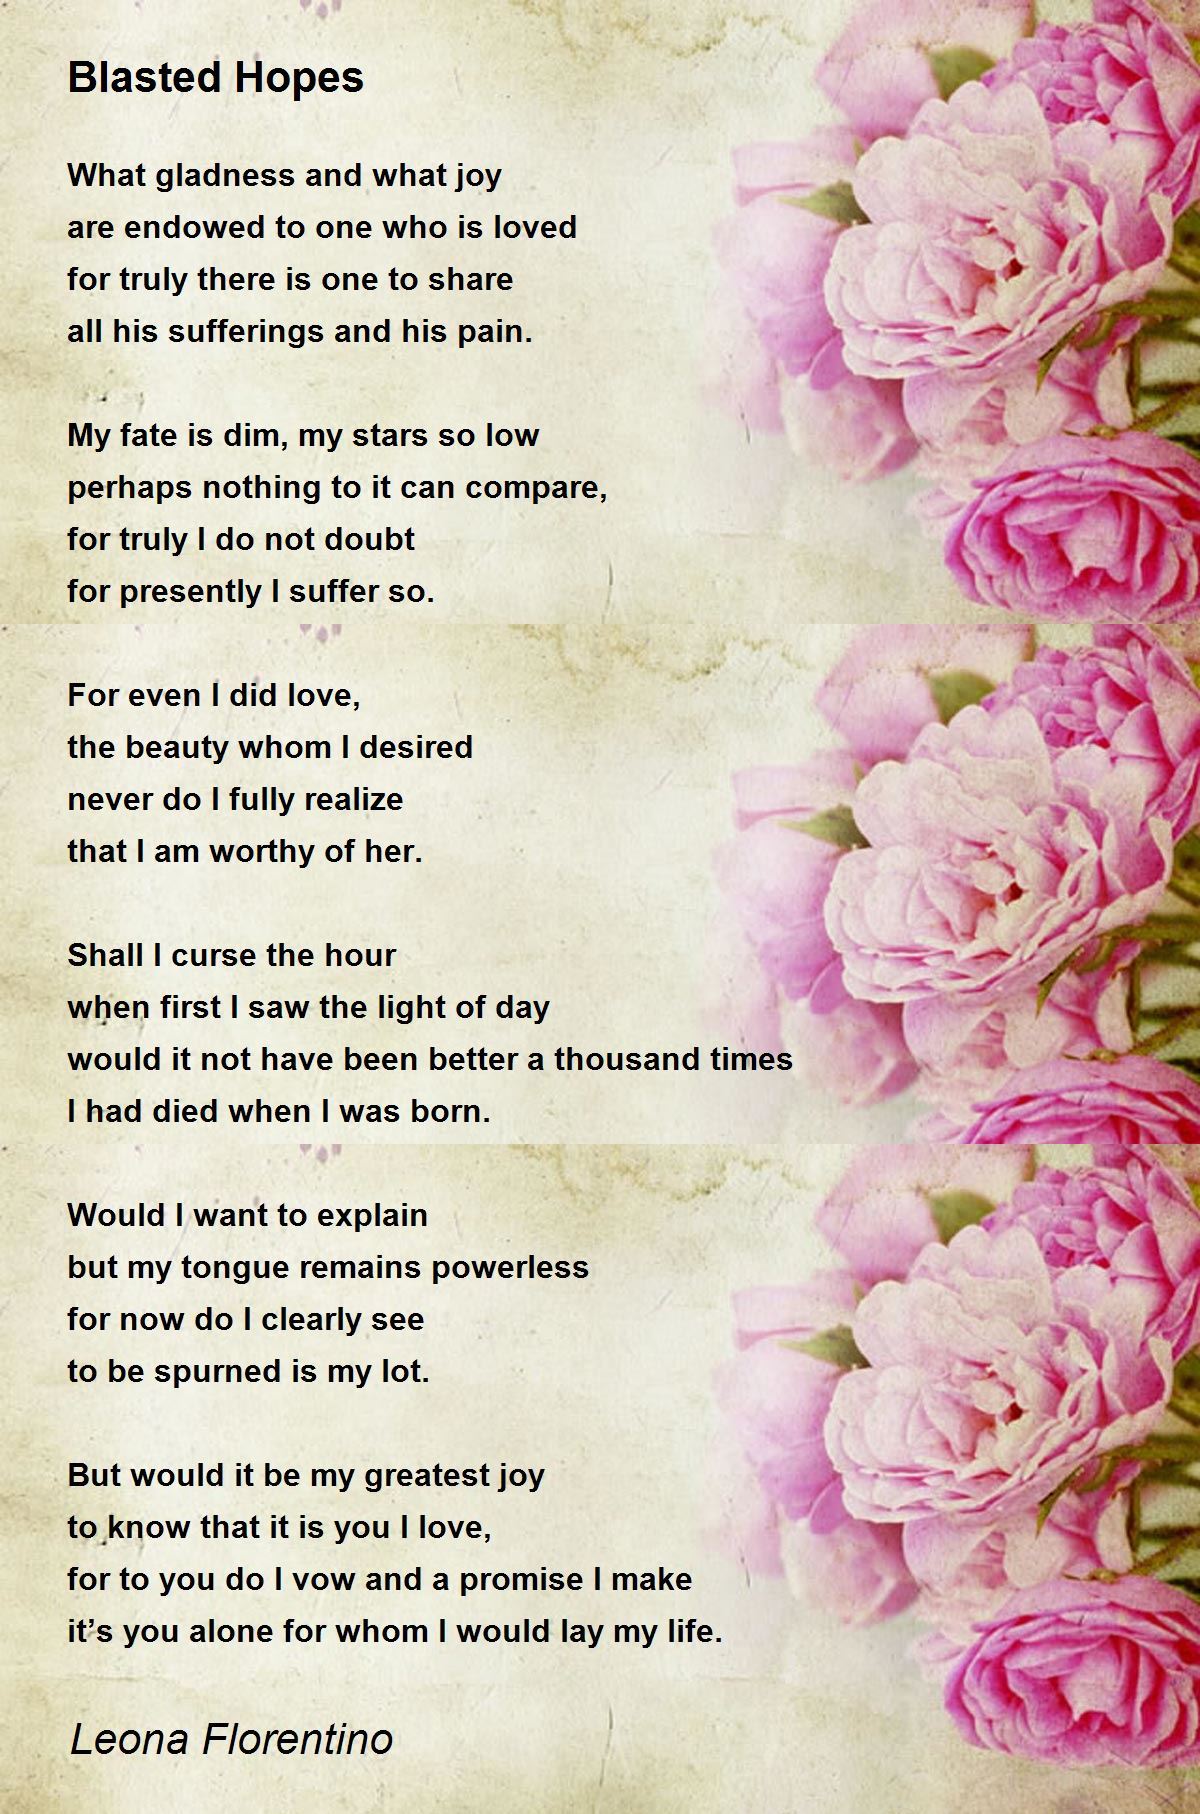 Blasted Hopes Poem by Leona Florentino - Poem Hunter